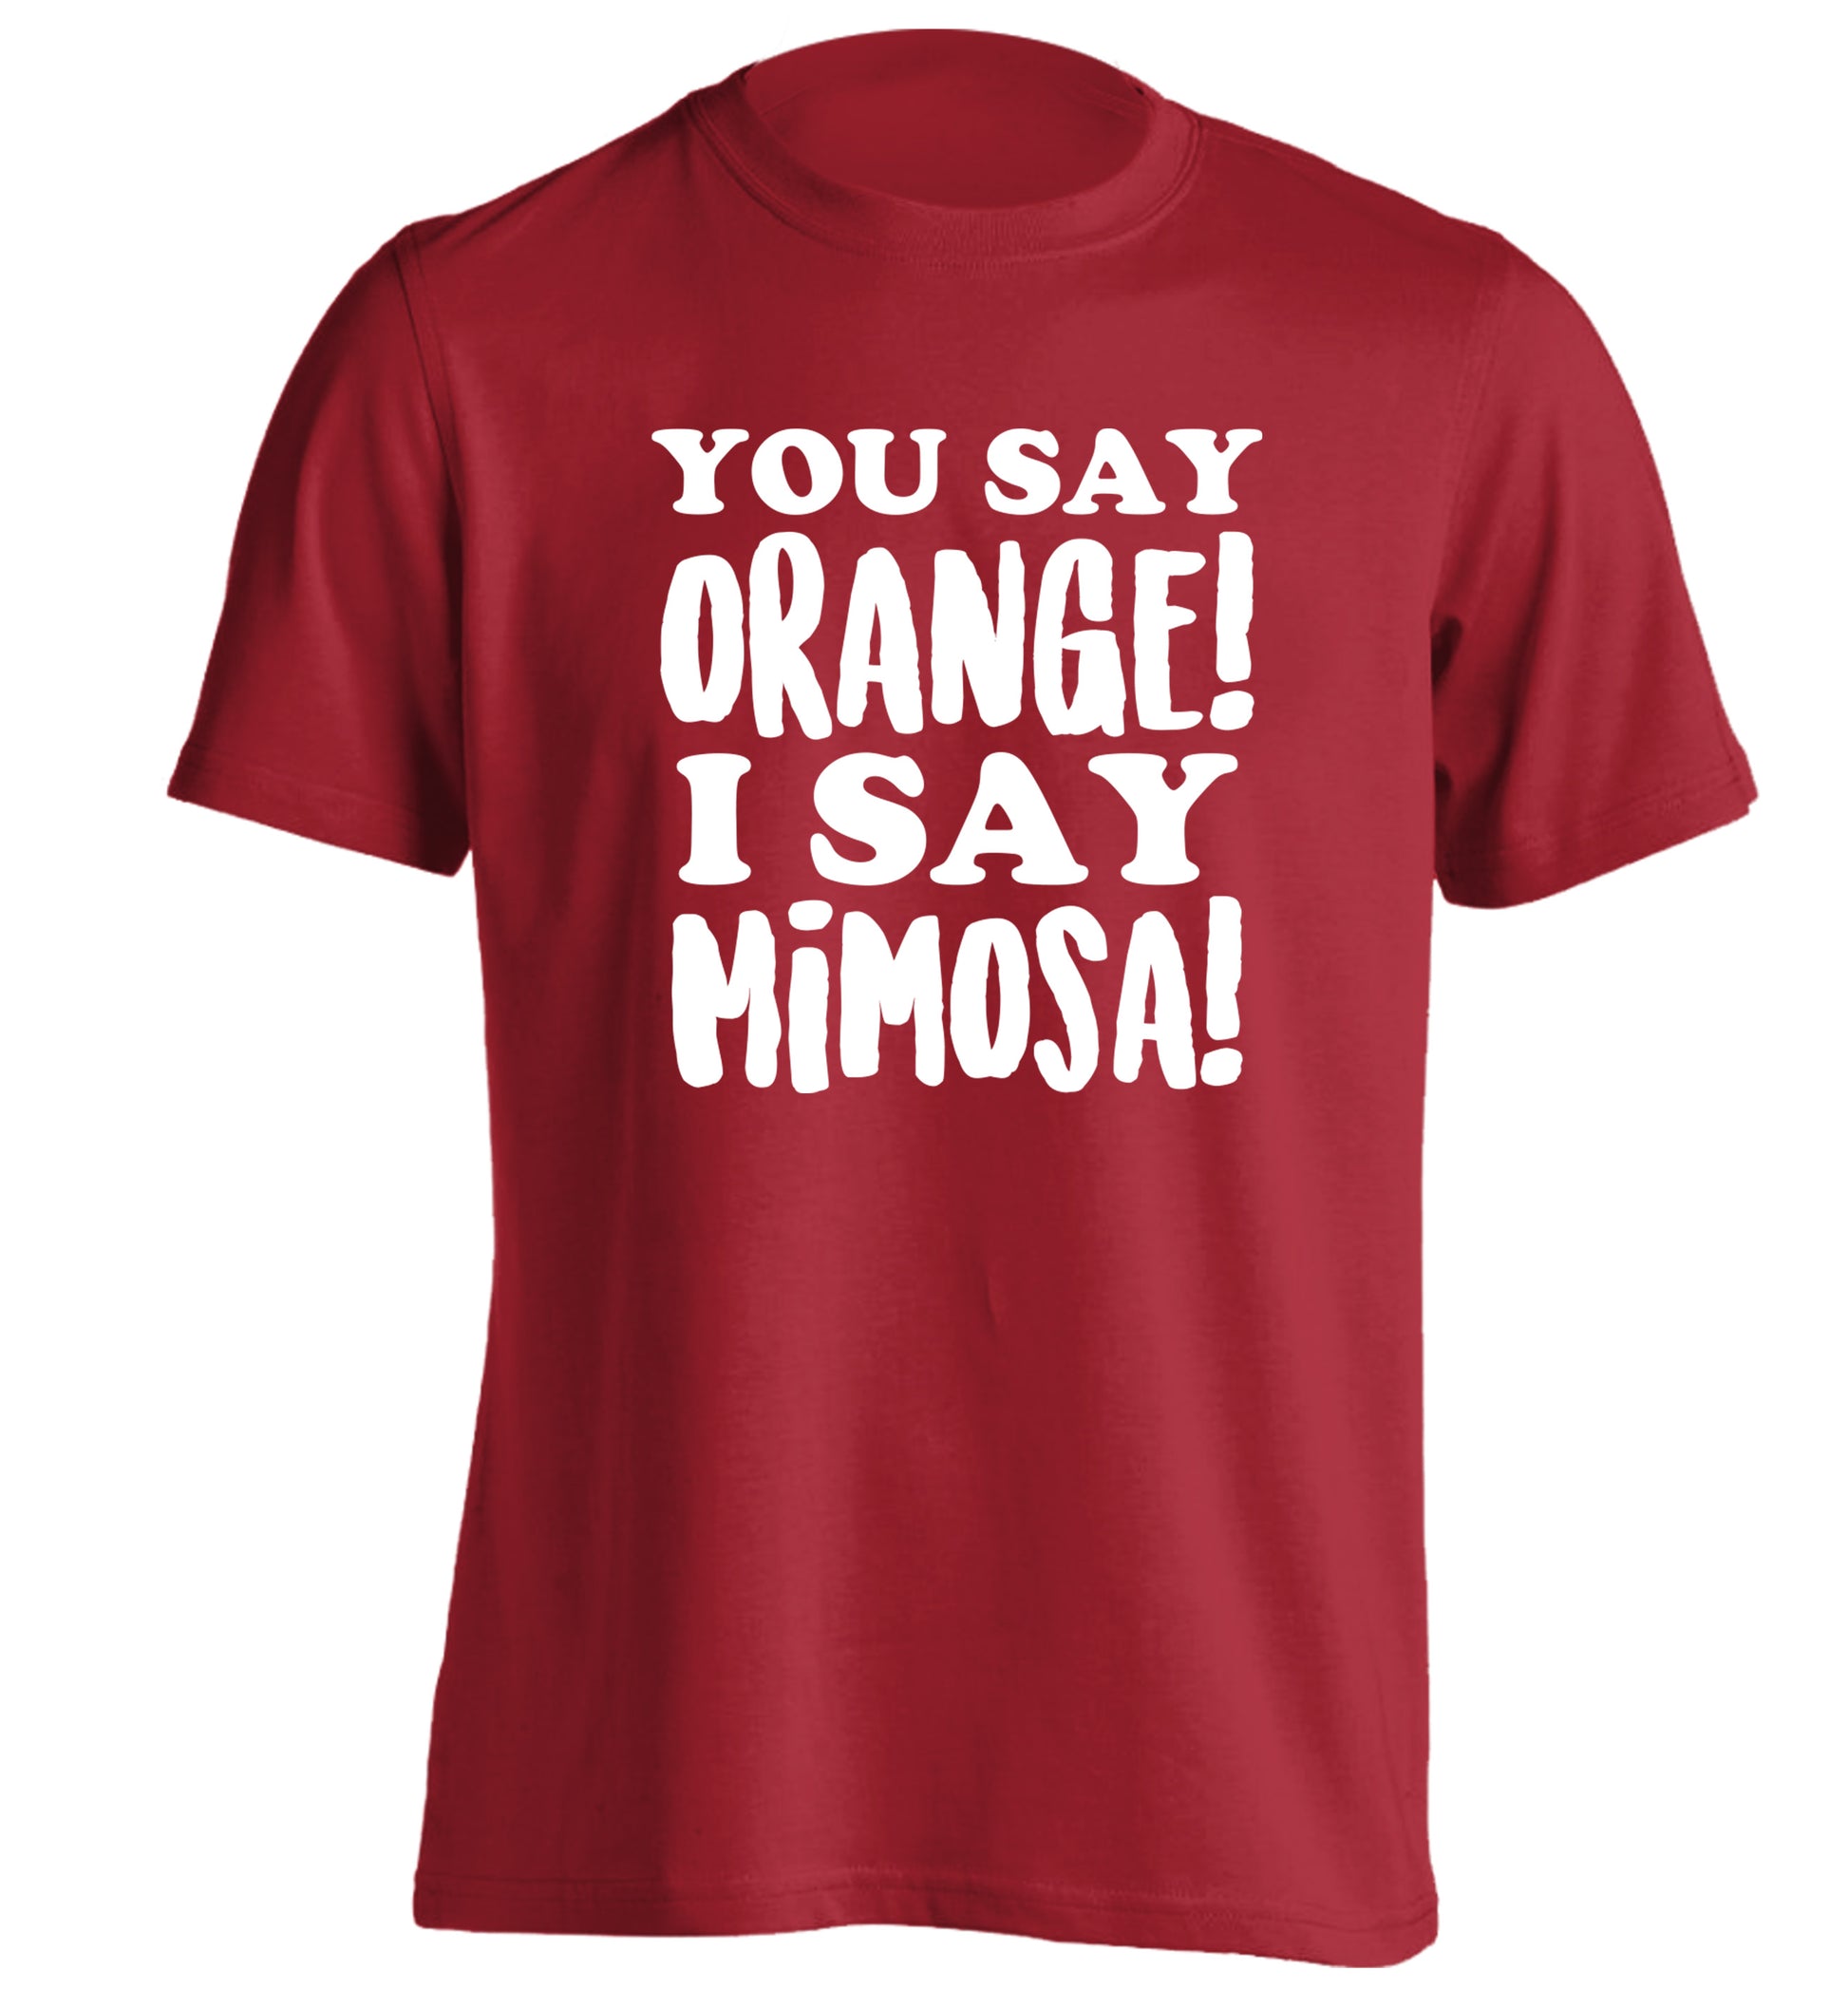 You say orange I say mimosa! adults unisex red Tshirt 2XL